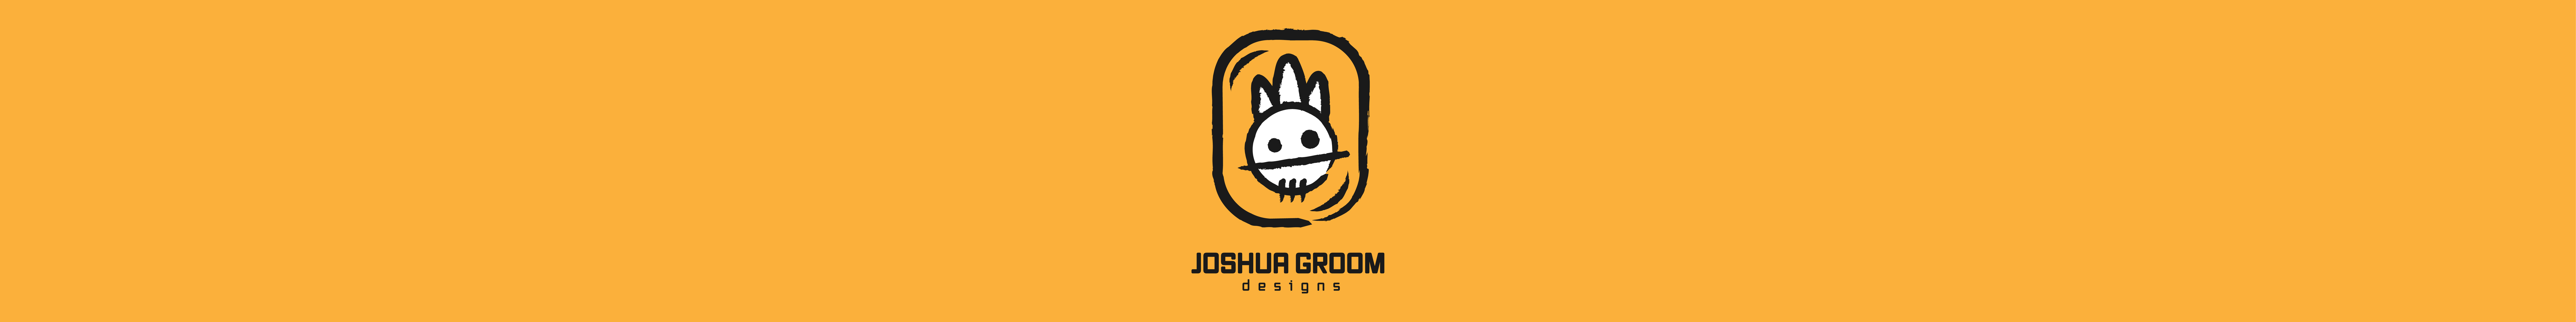 Joshua Groom's profile banner